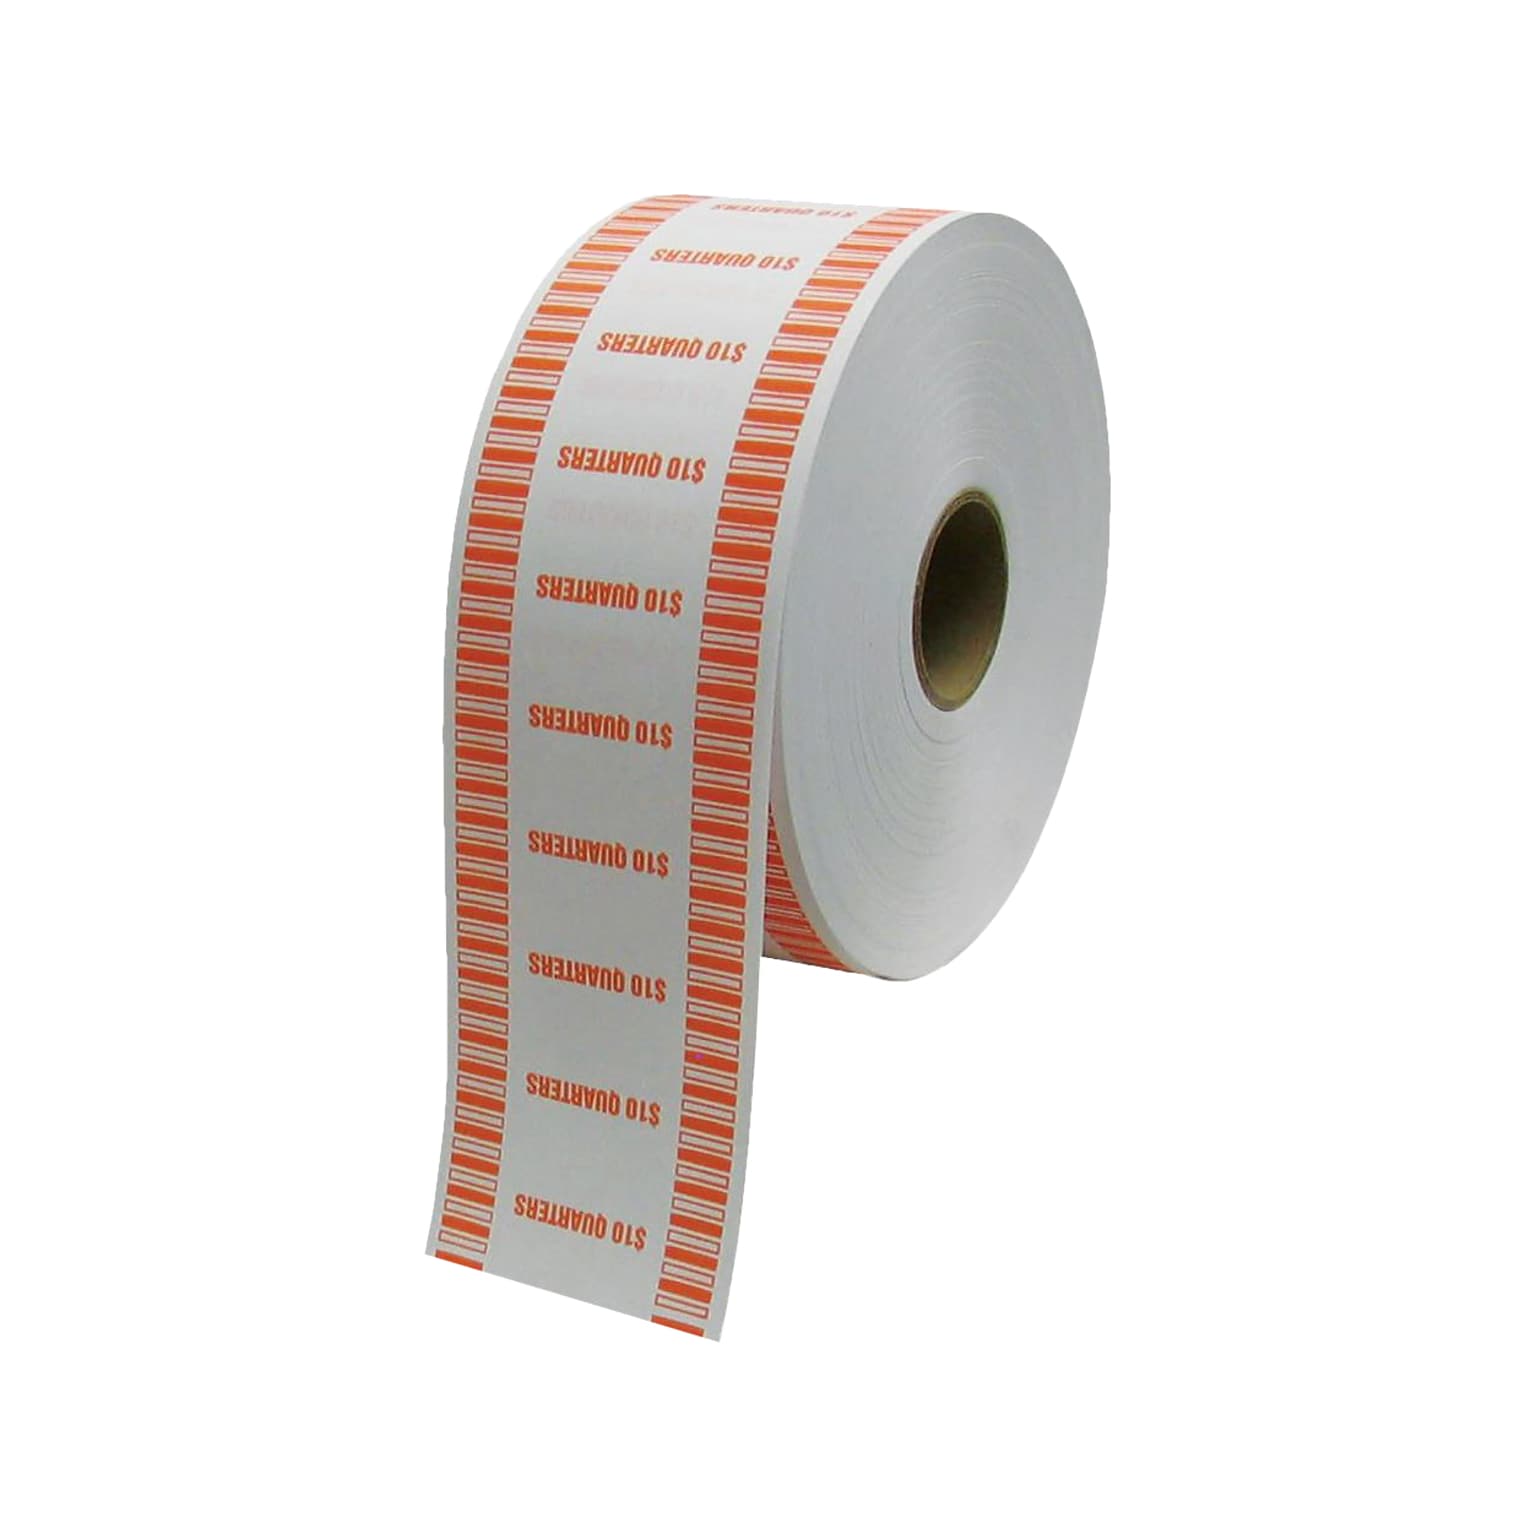 CONTROLTEK $10 Quarter Coin Wrapper for Coin Wrapping Machines, Kraft/Orange, 8 Rolls/Carton (575037)